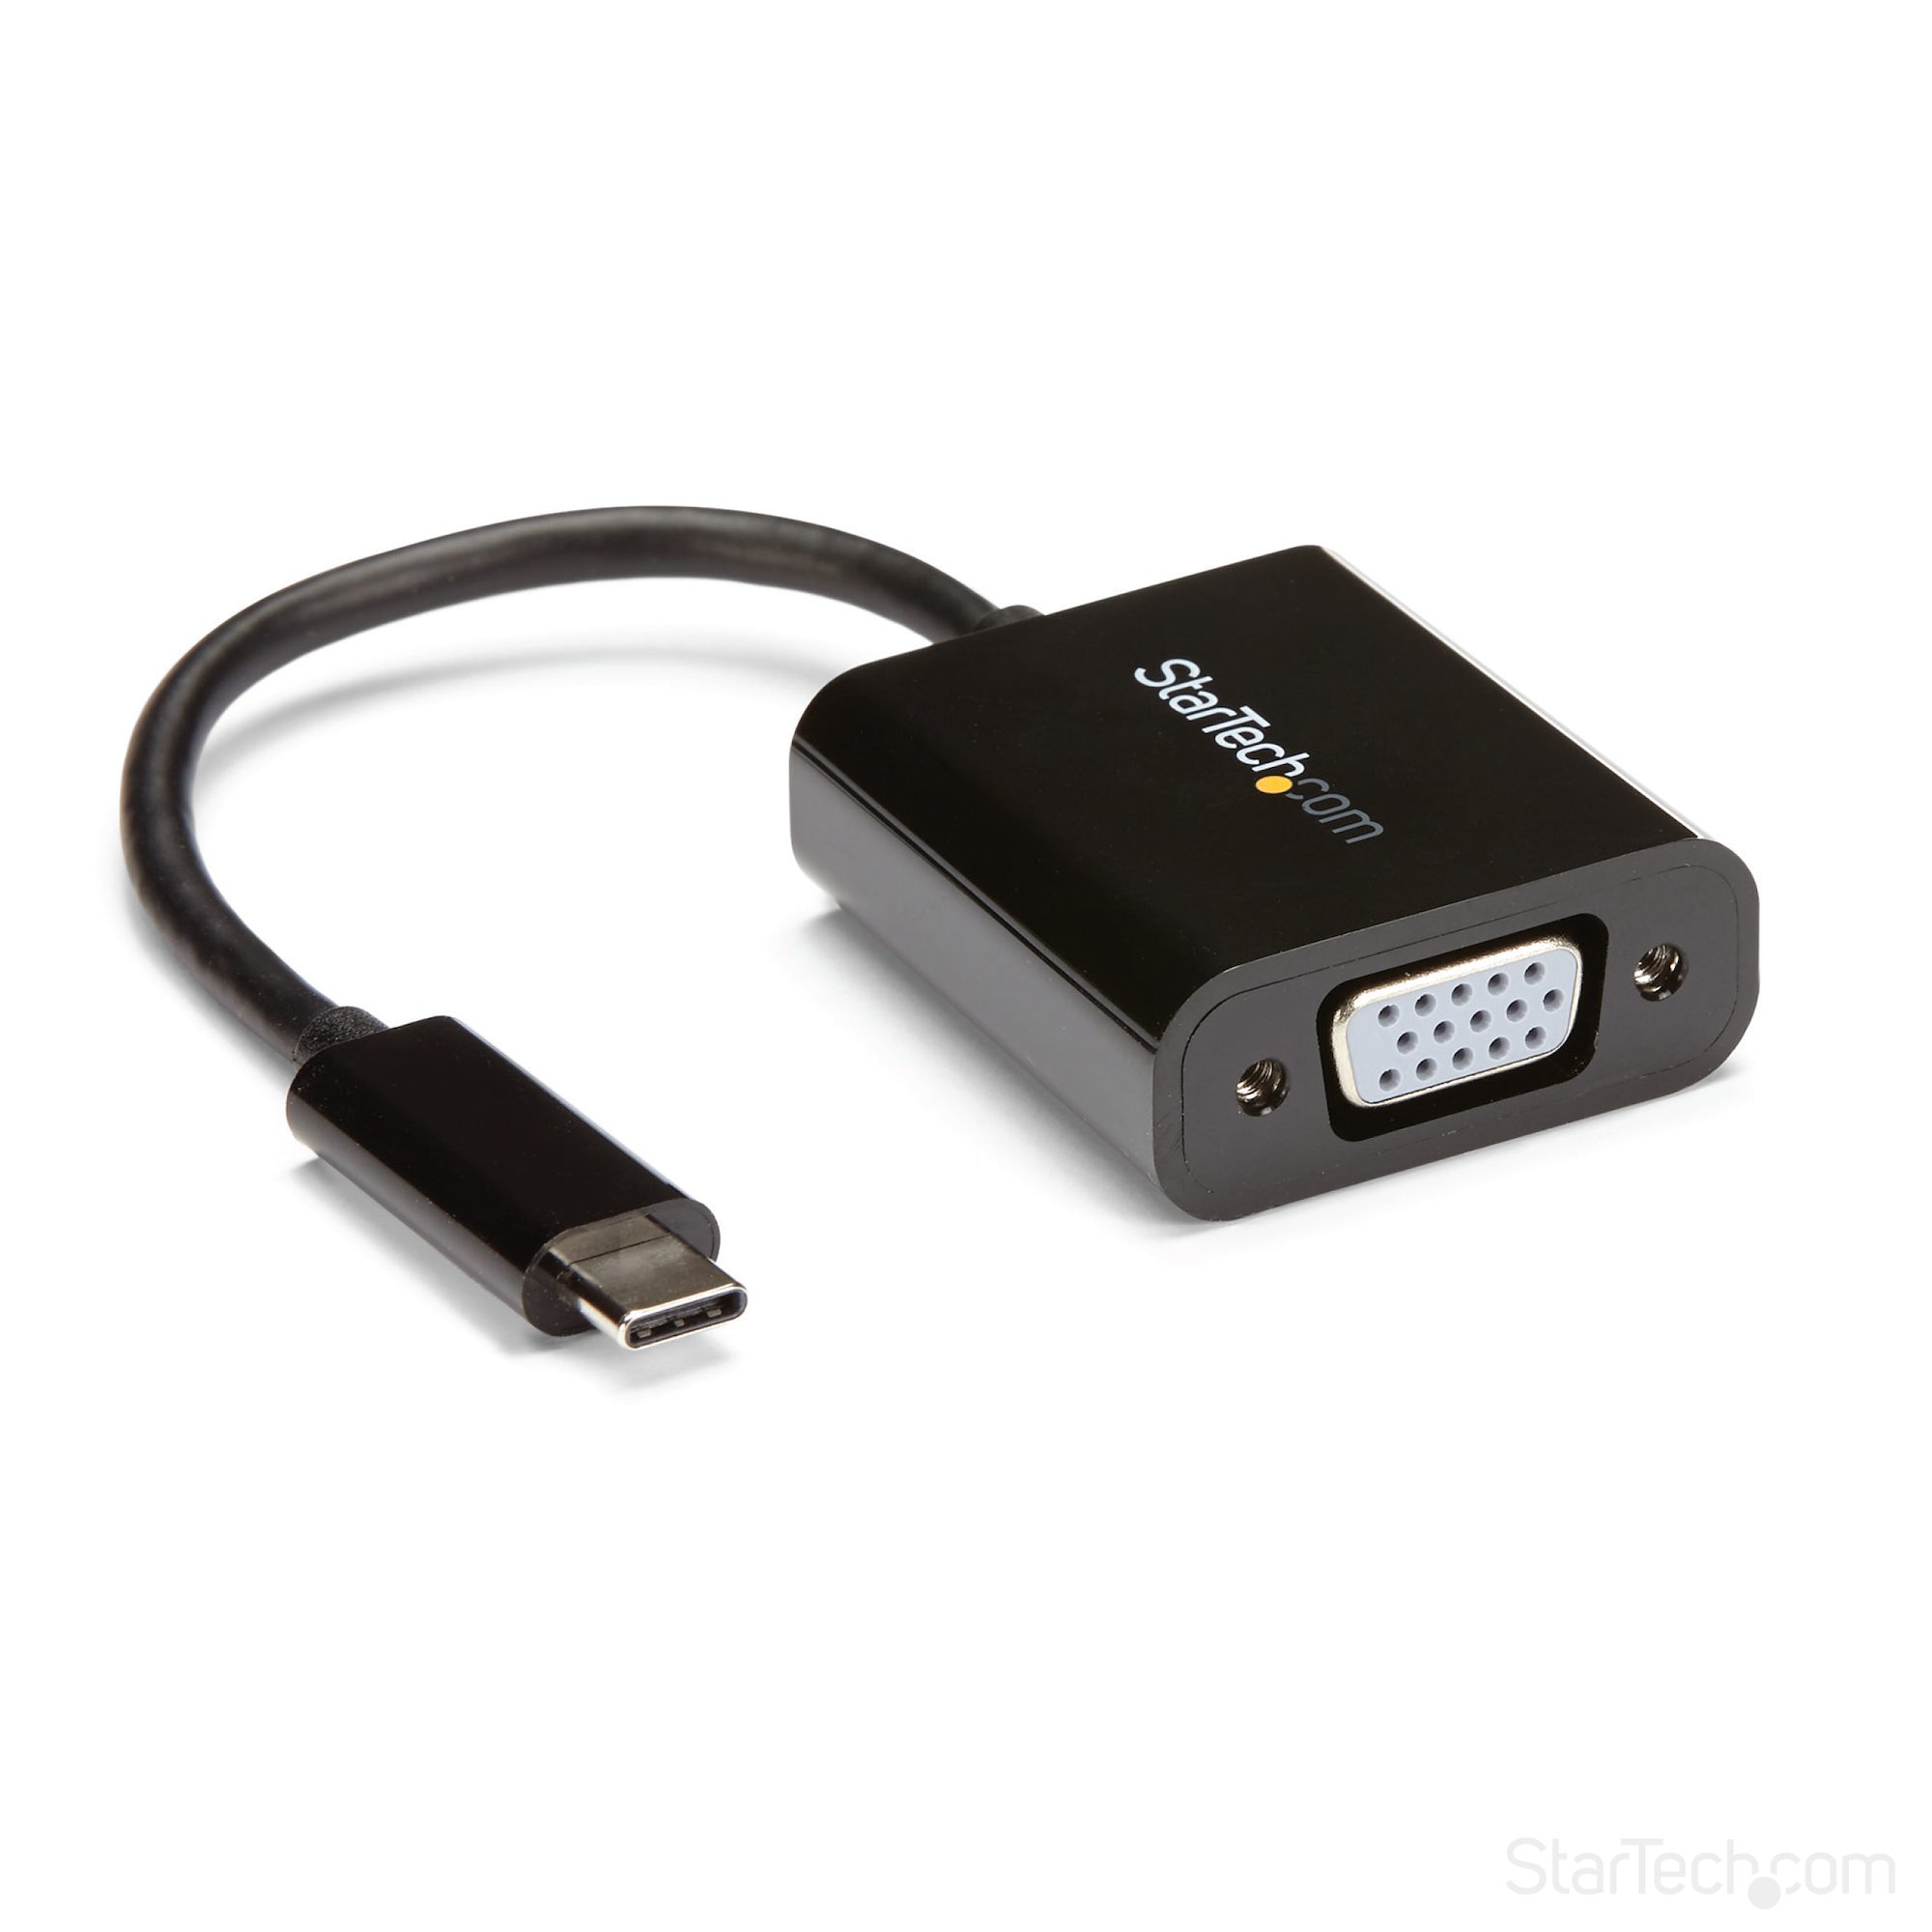 Startech USB-C to VGA Adapter CDP2VGA